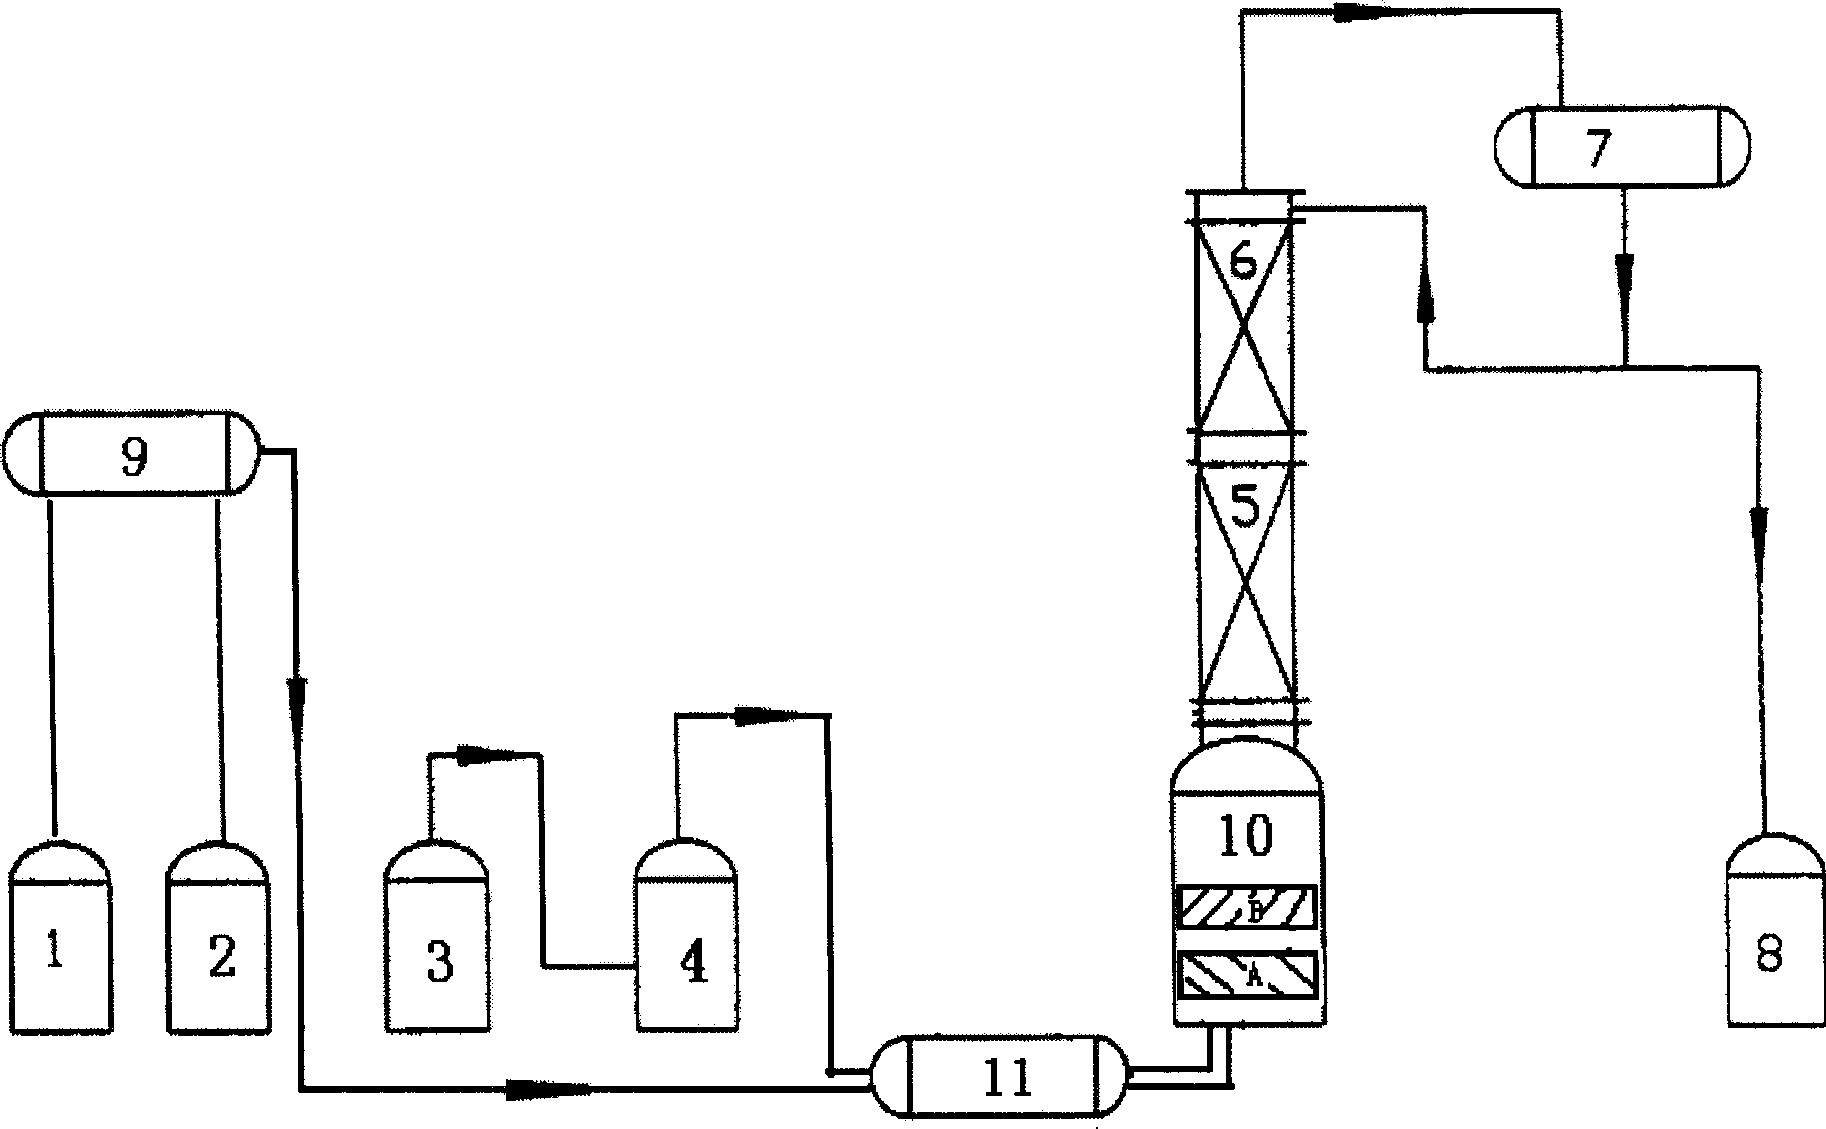 Process of preparing dimethyl dichloro silicane by organosilicon high and low boiling matter